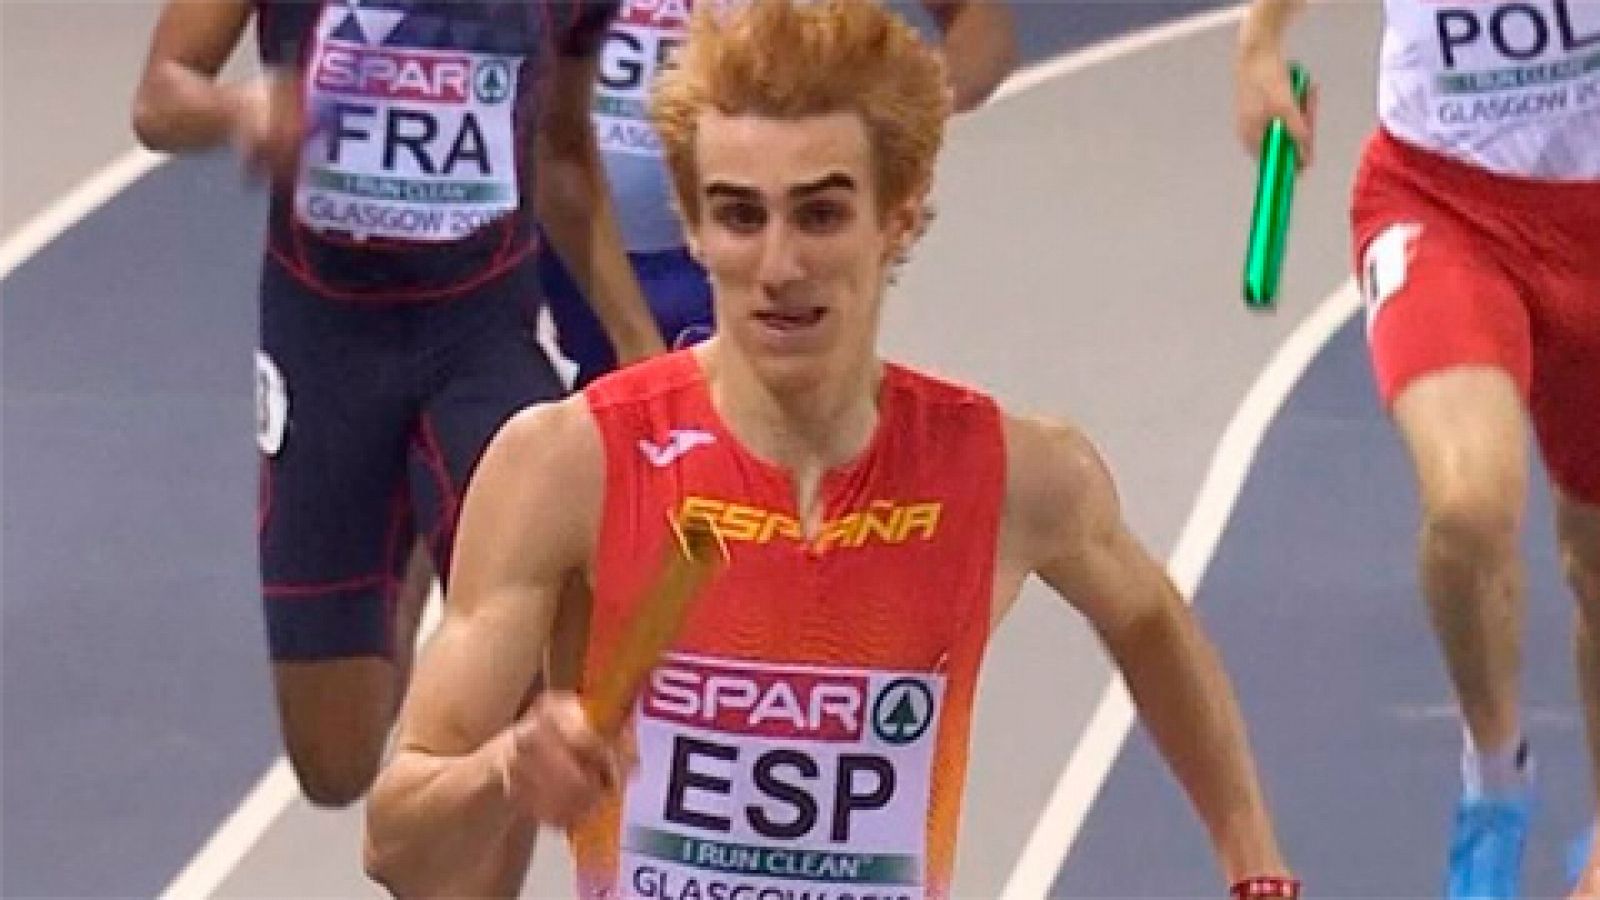 Atletismo: Bernat Erta, gran promesa del atletismo español - rtve.es